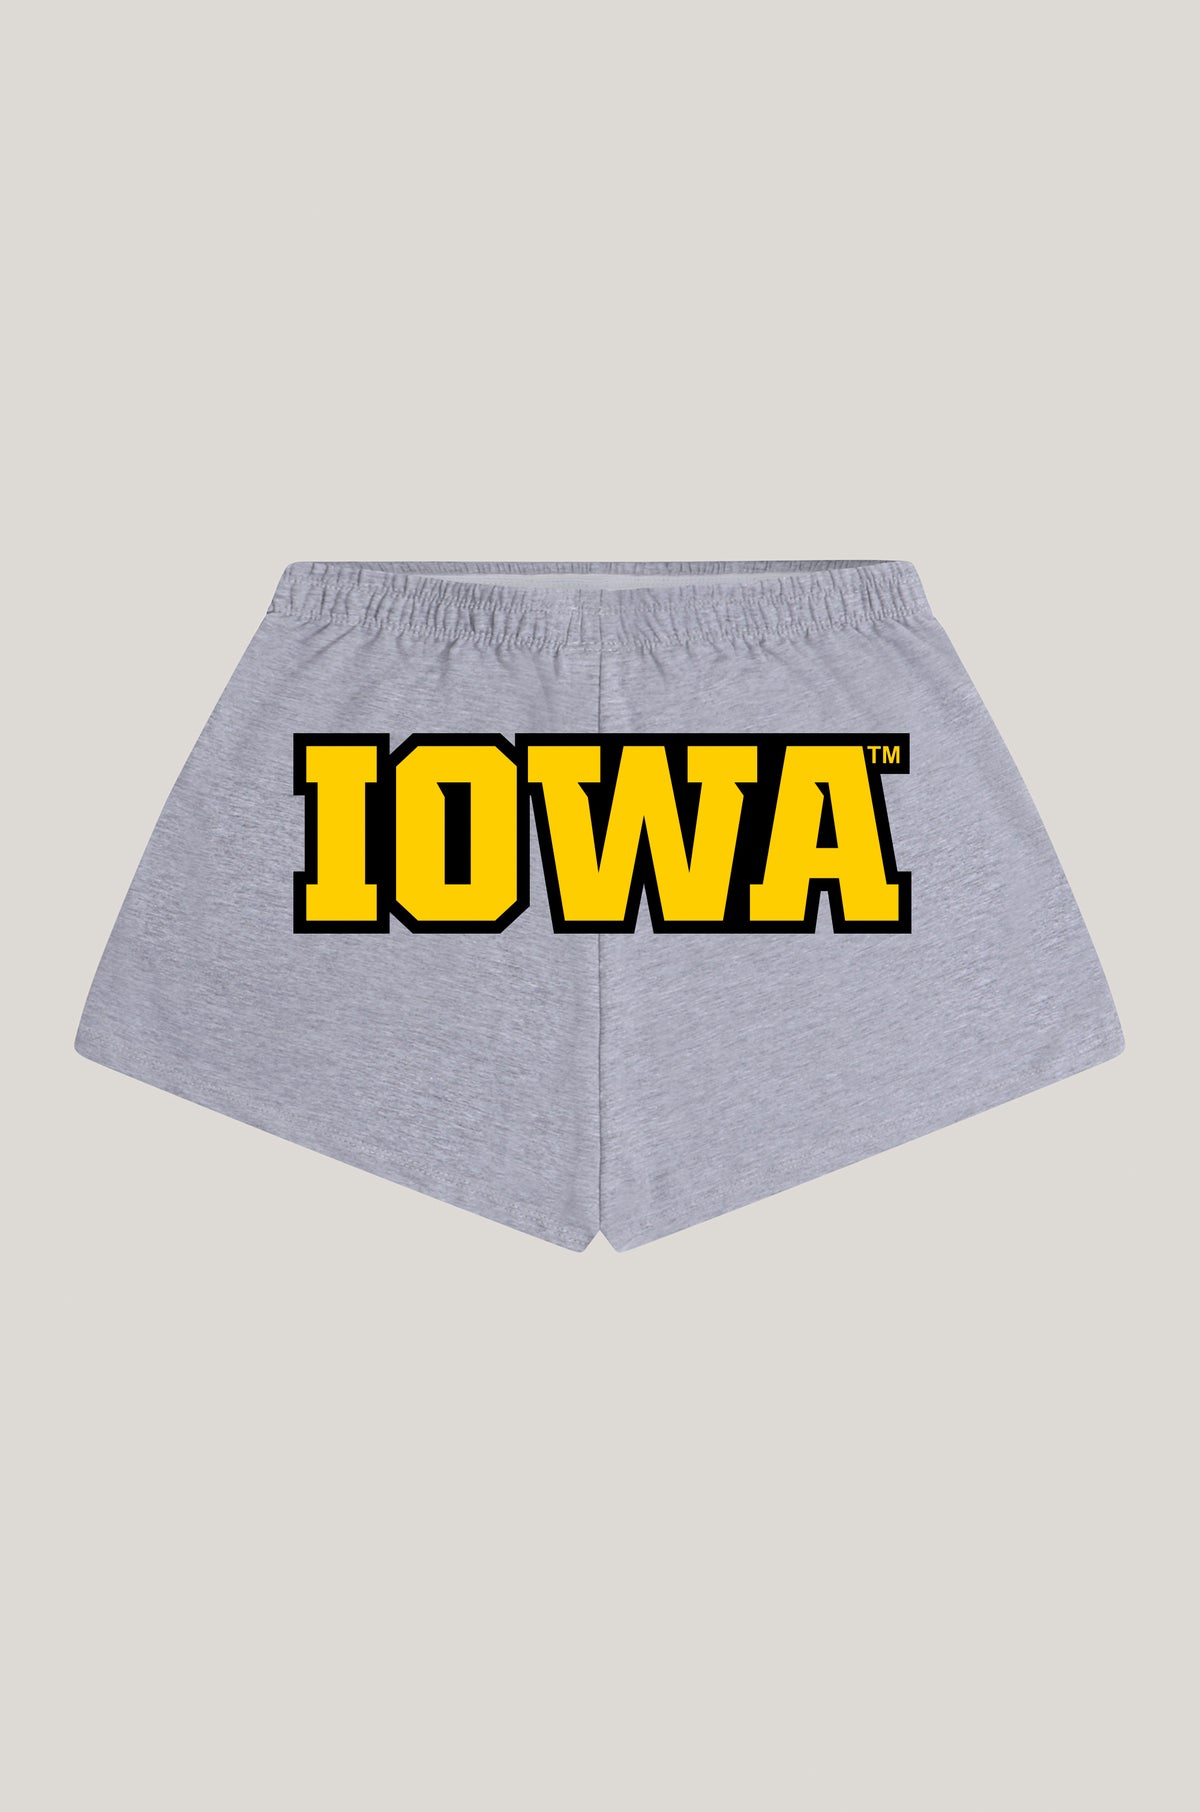 Iowa P.E. Shorts